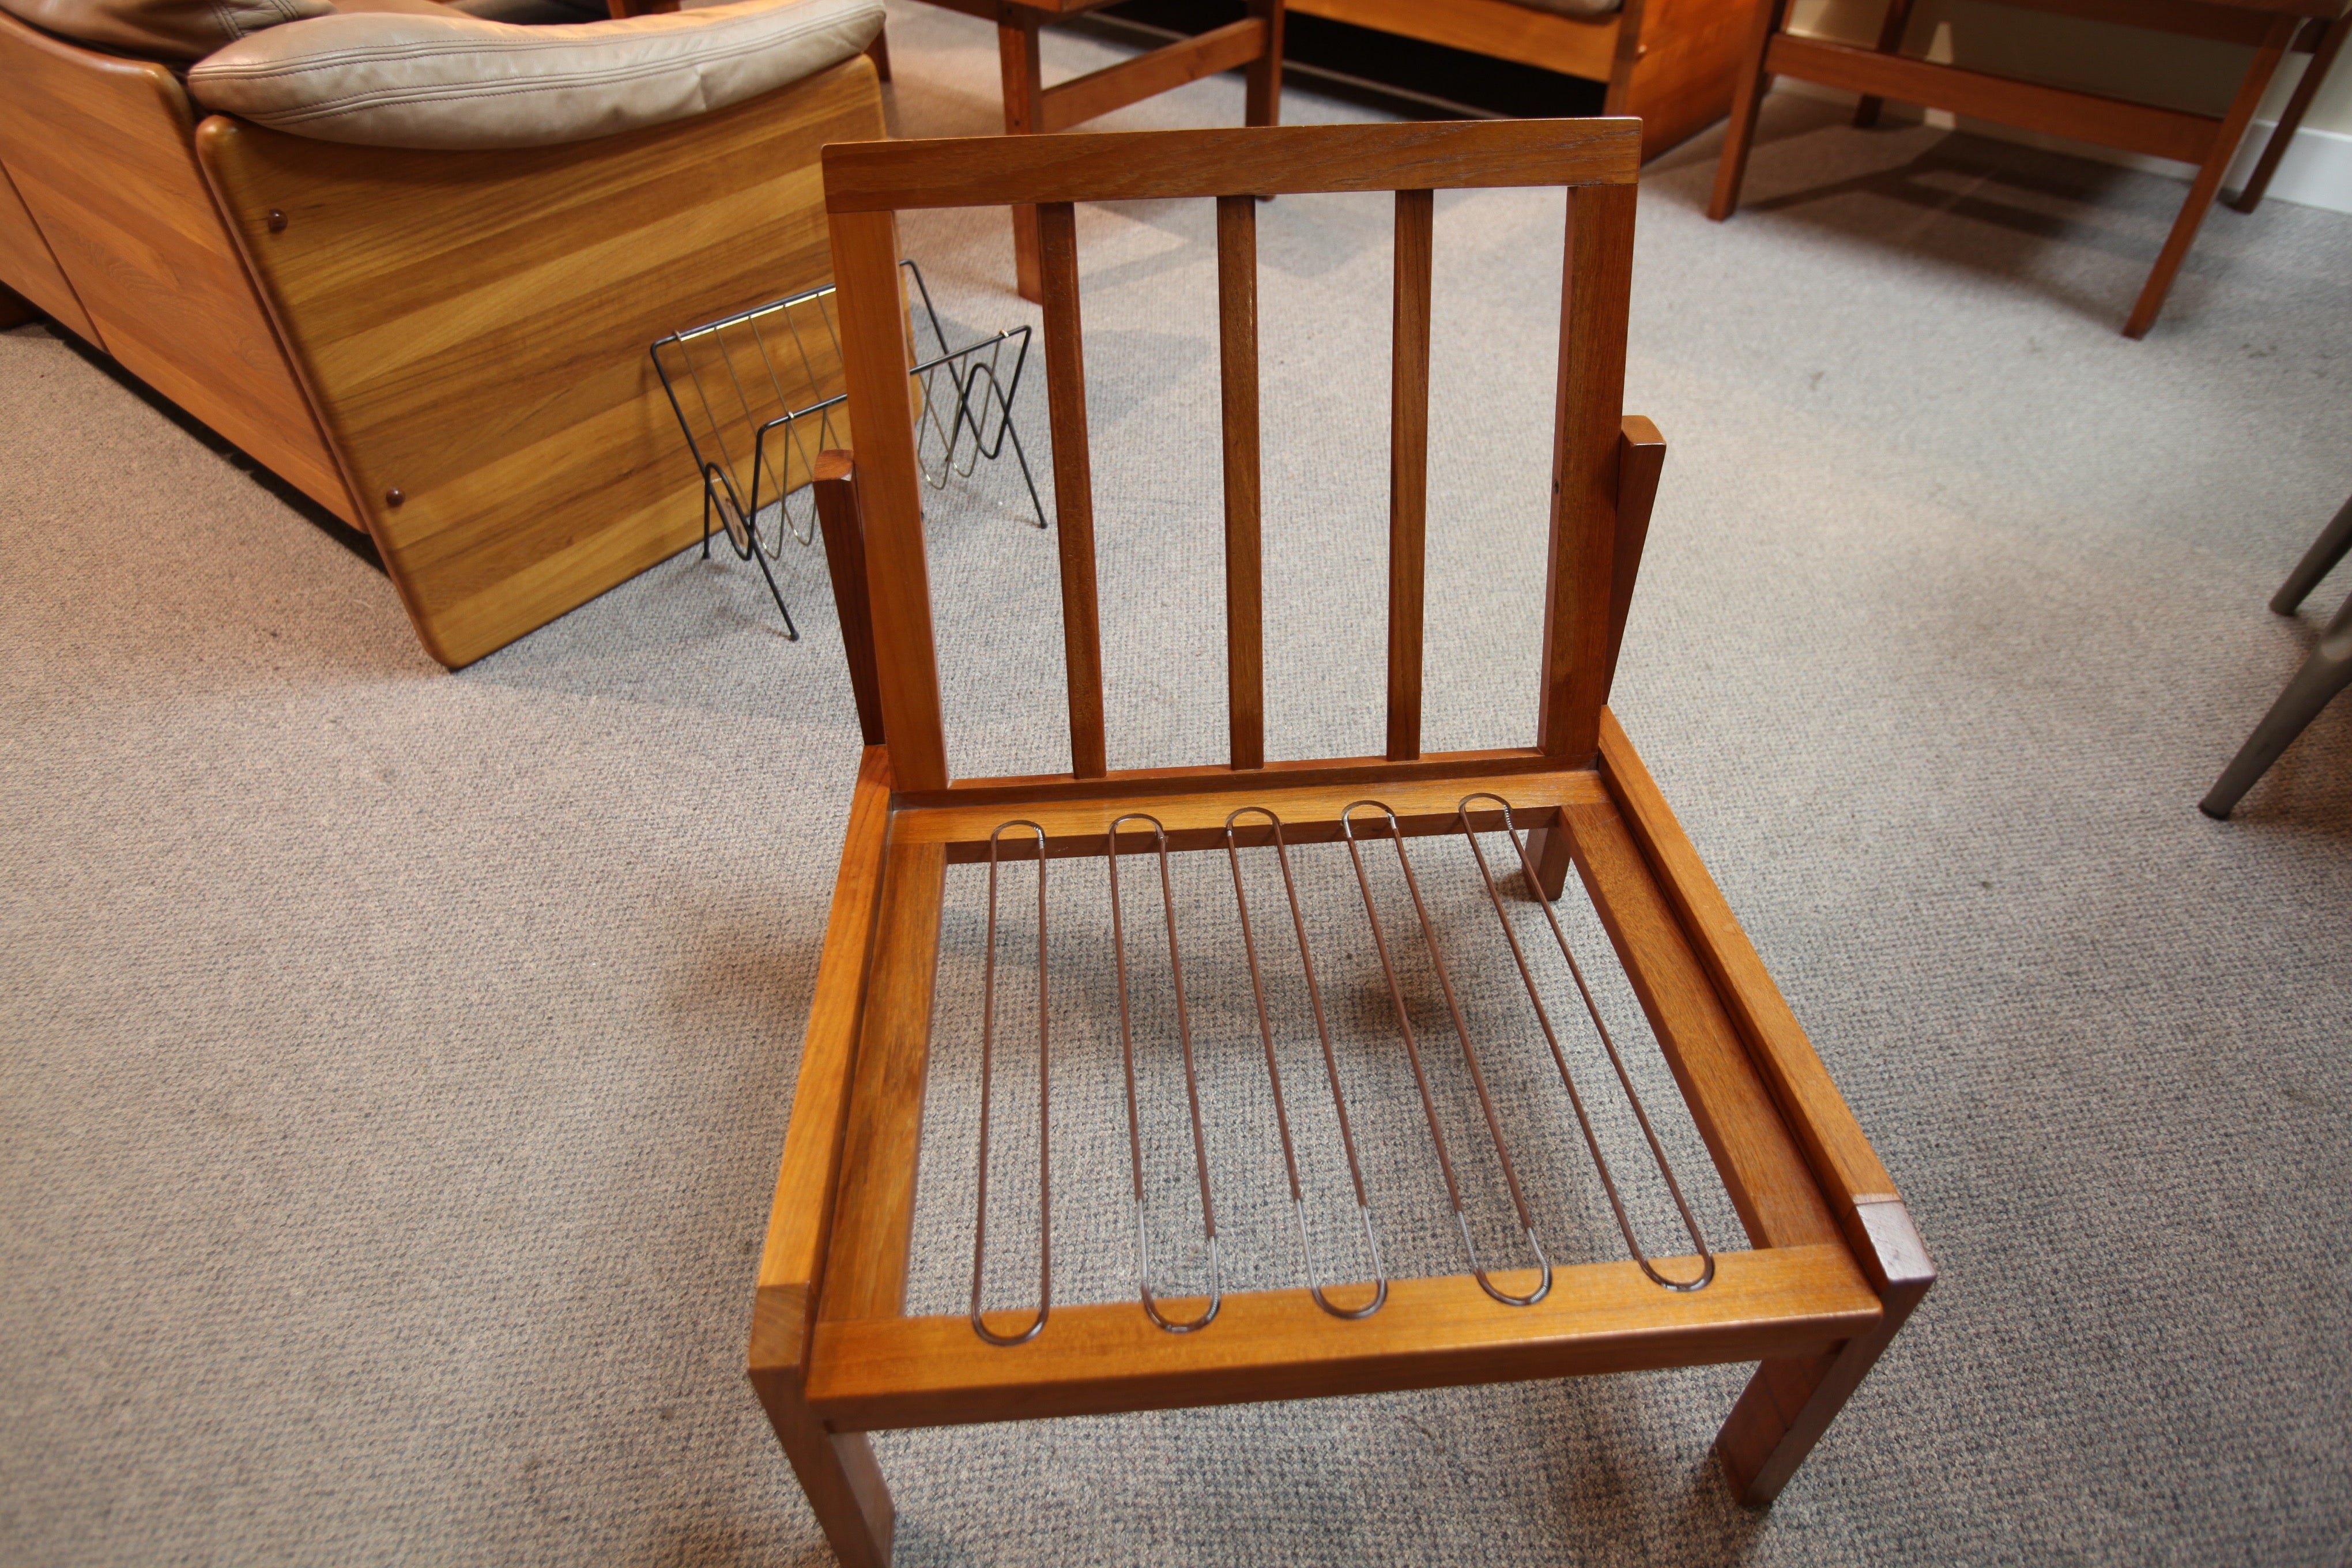 Vintage Teak Chair Frame (24"W x 26"D x 26.5"H)